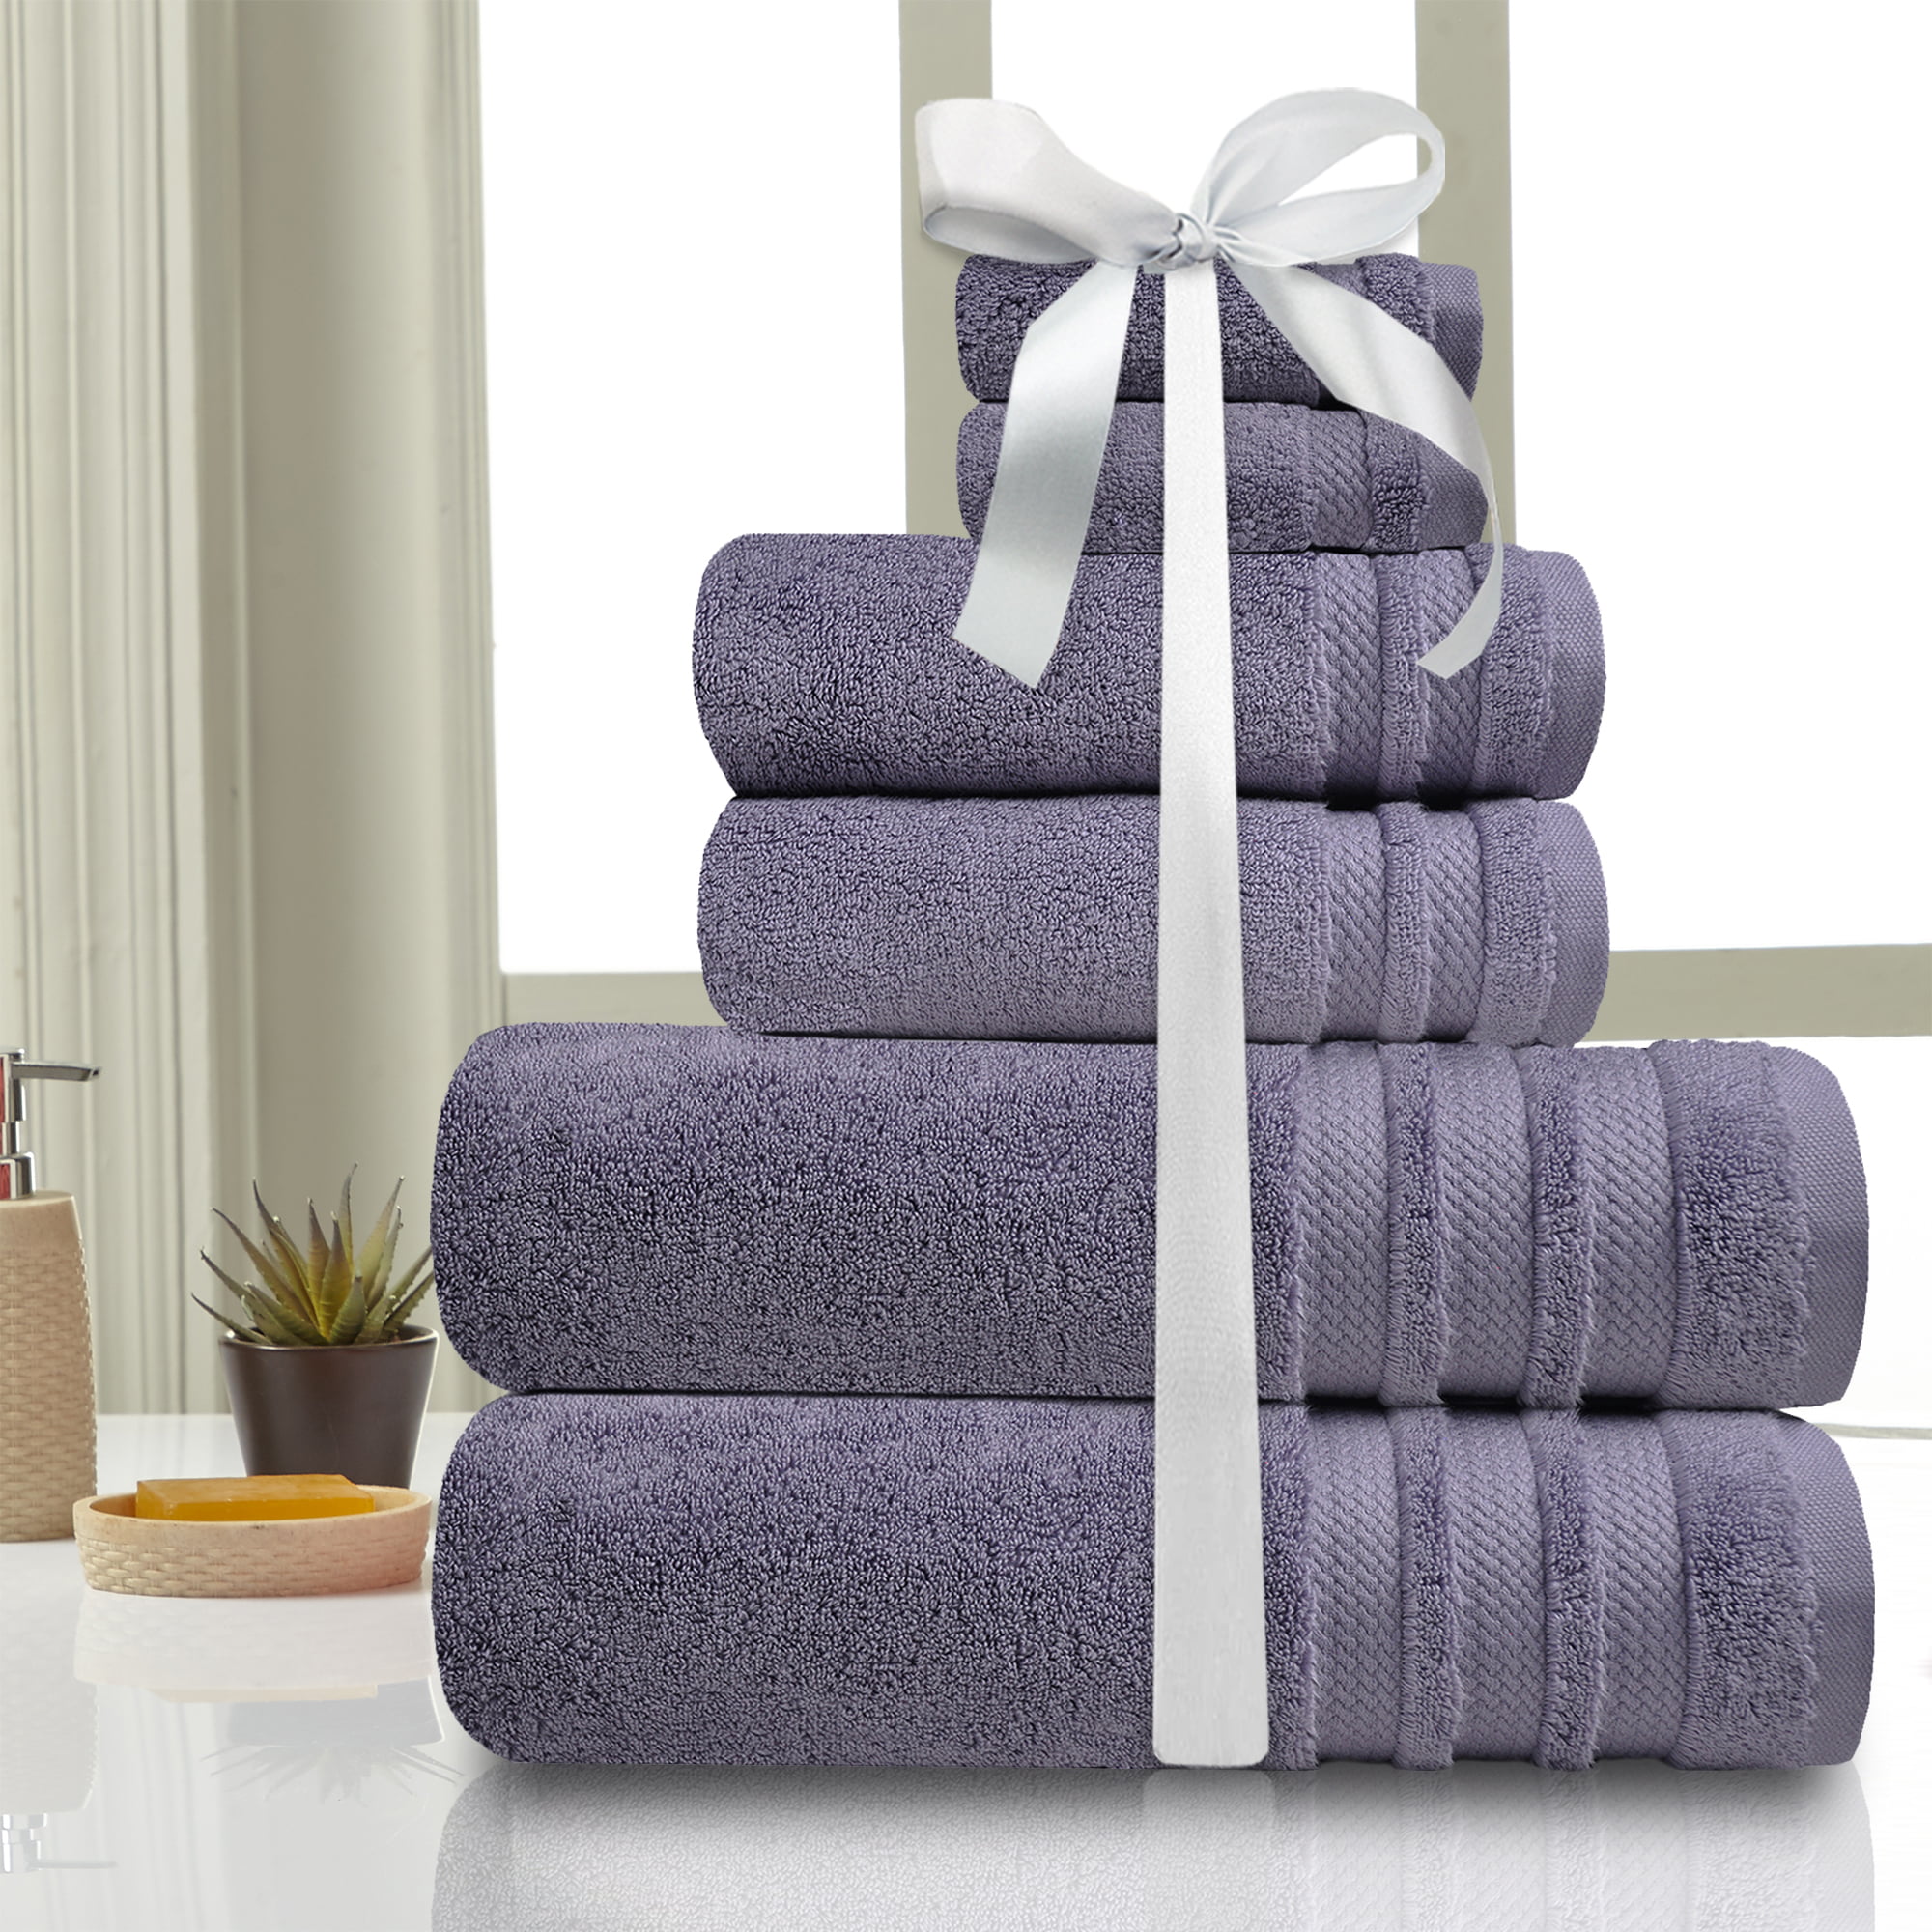 FINE Bath Towel - 202 Stone –